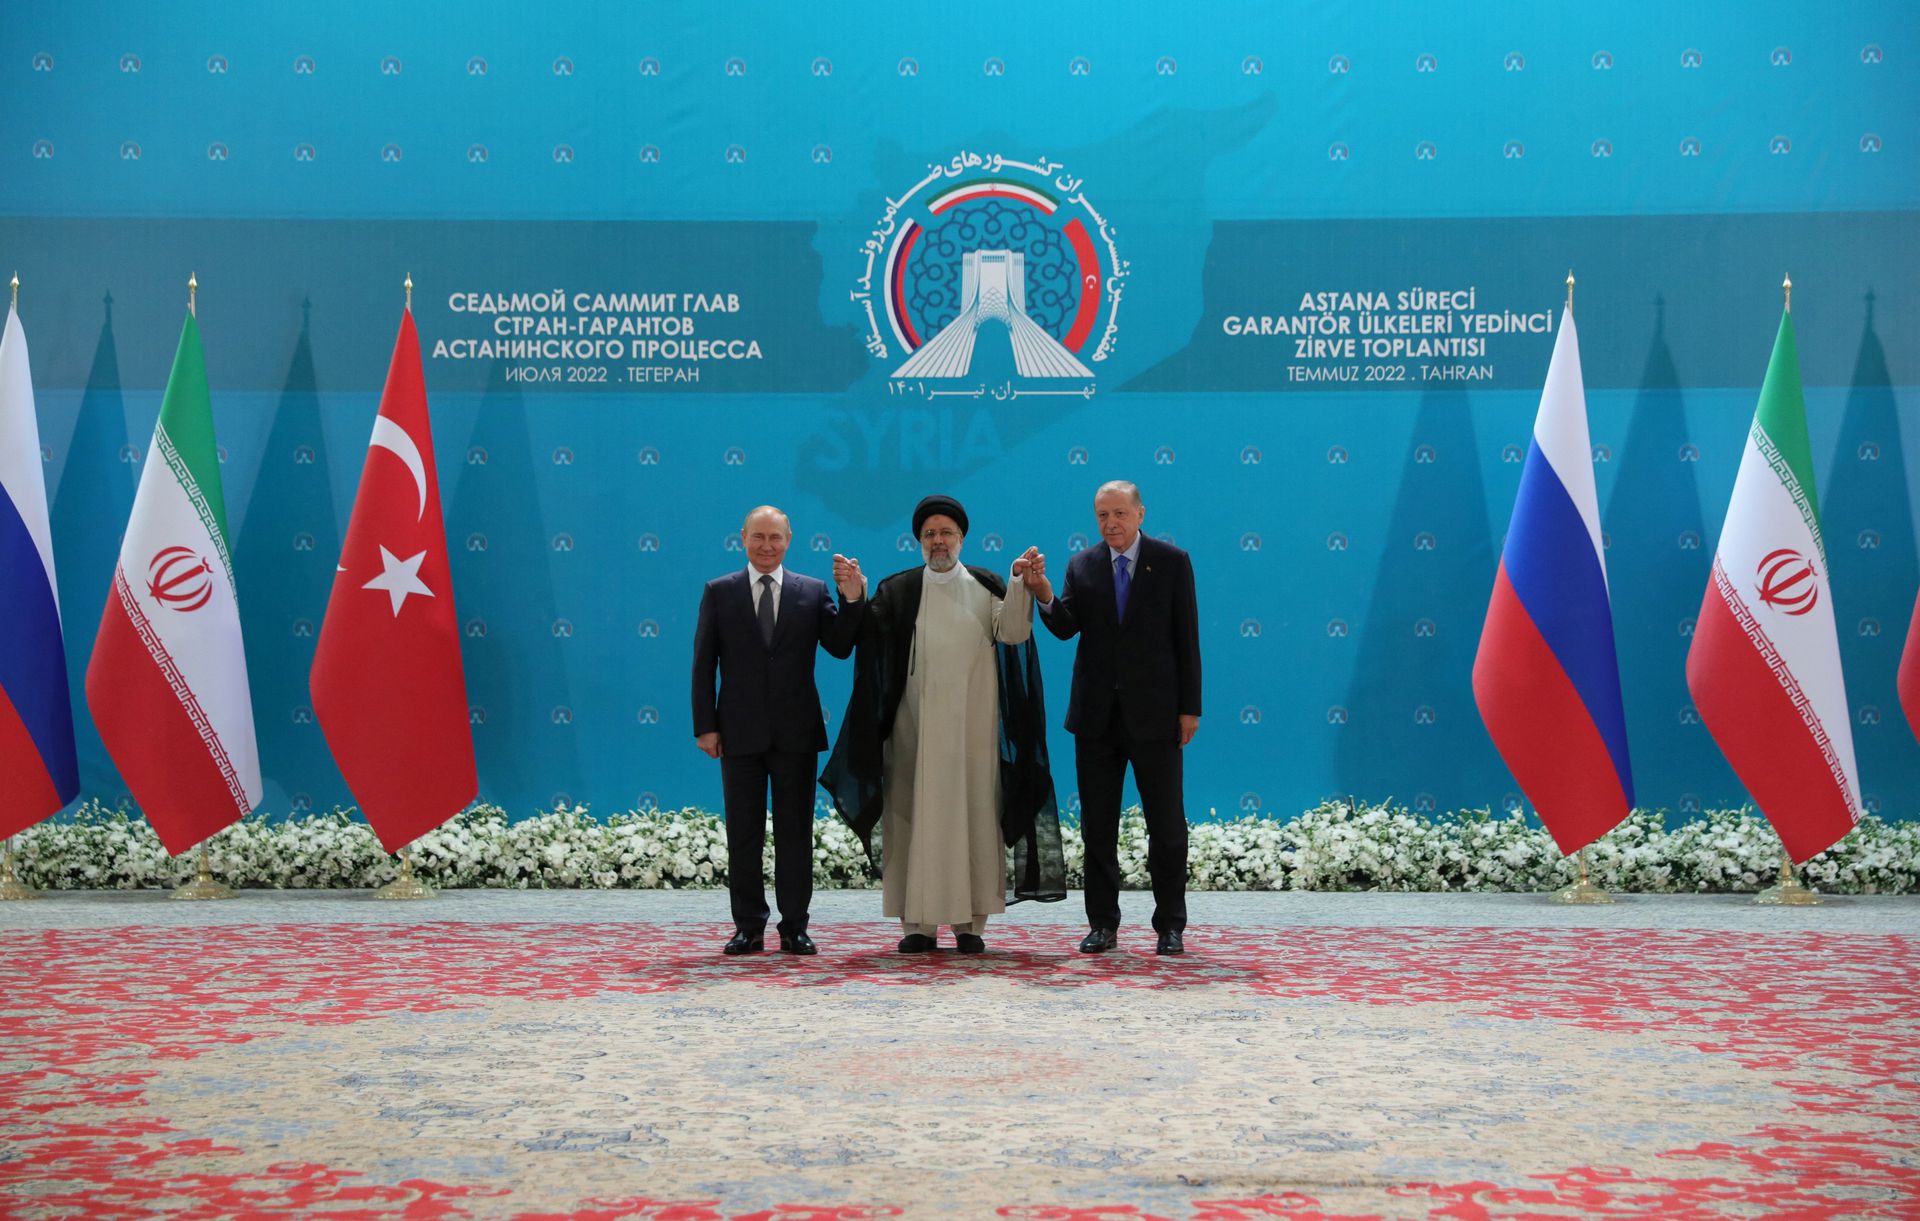 Putin with the Iranian and Turkish leaders